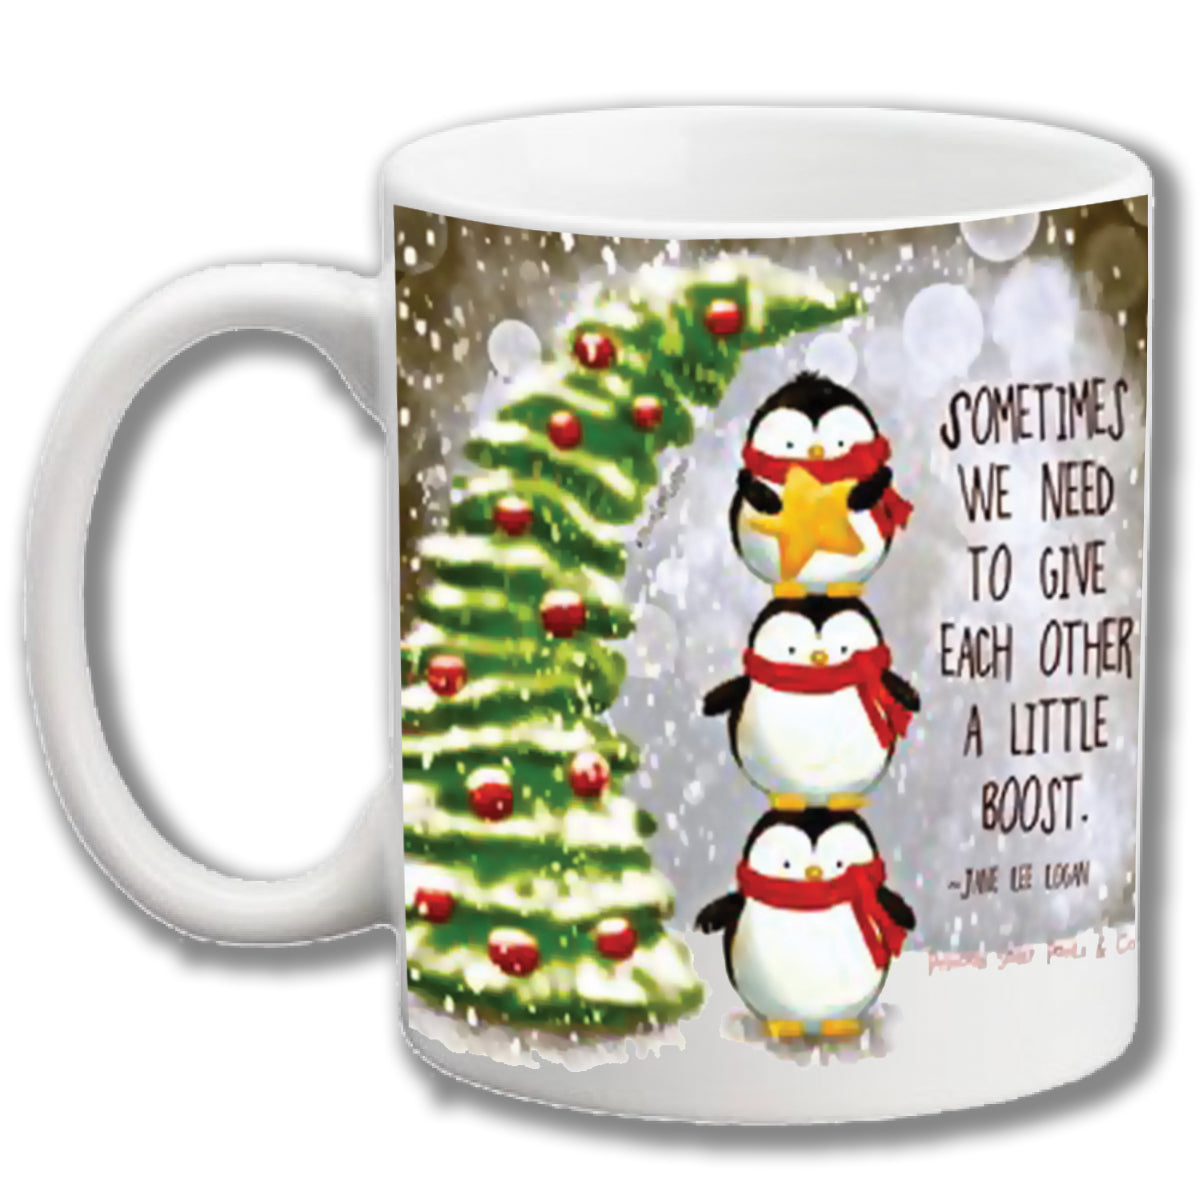 Christmas mug (A little boost)